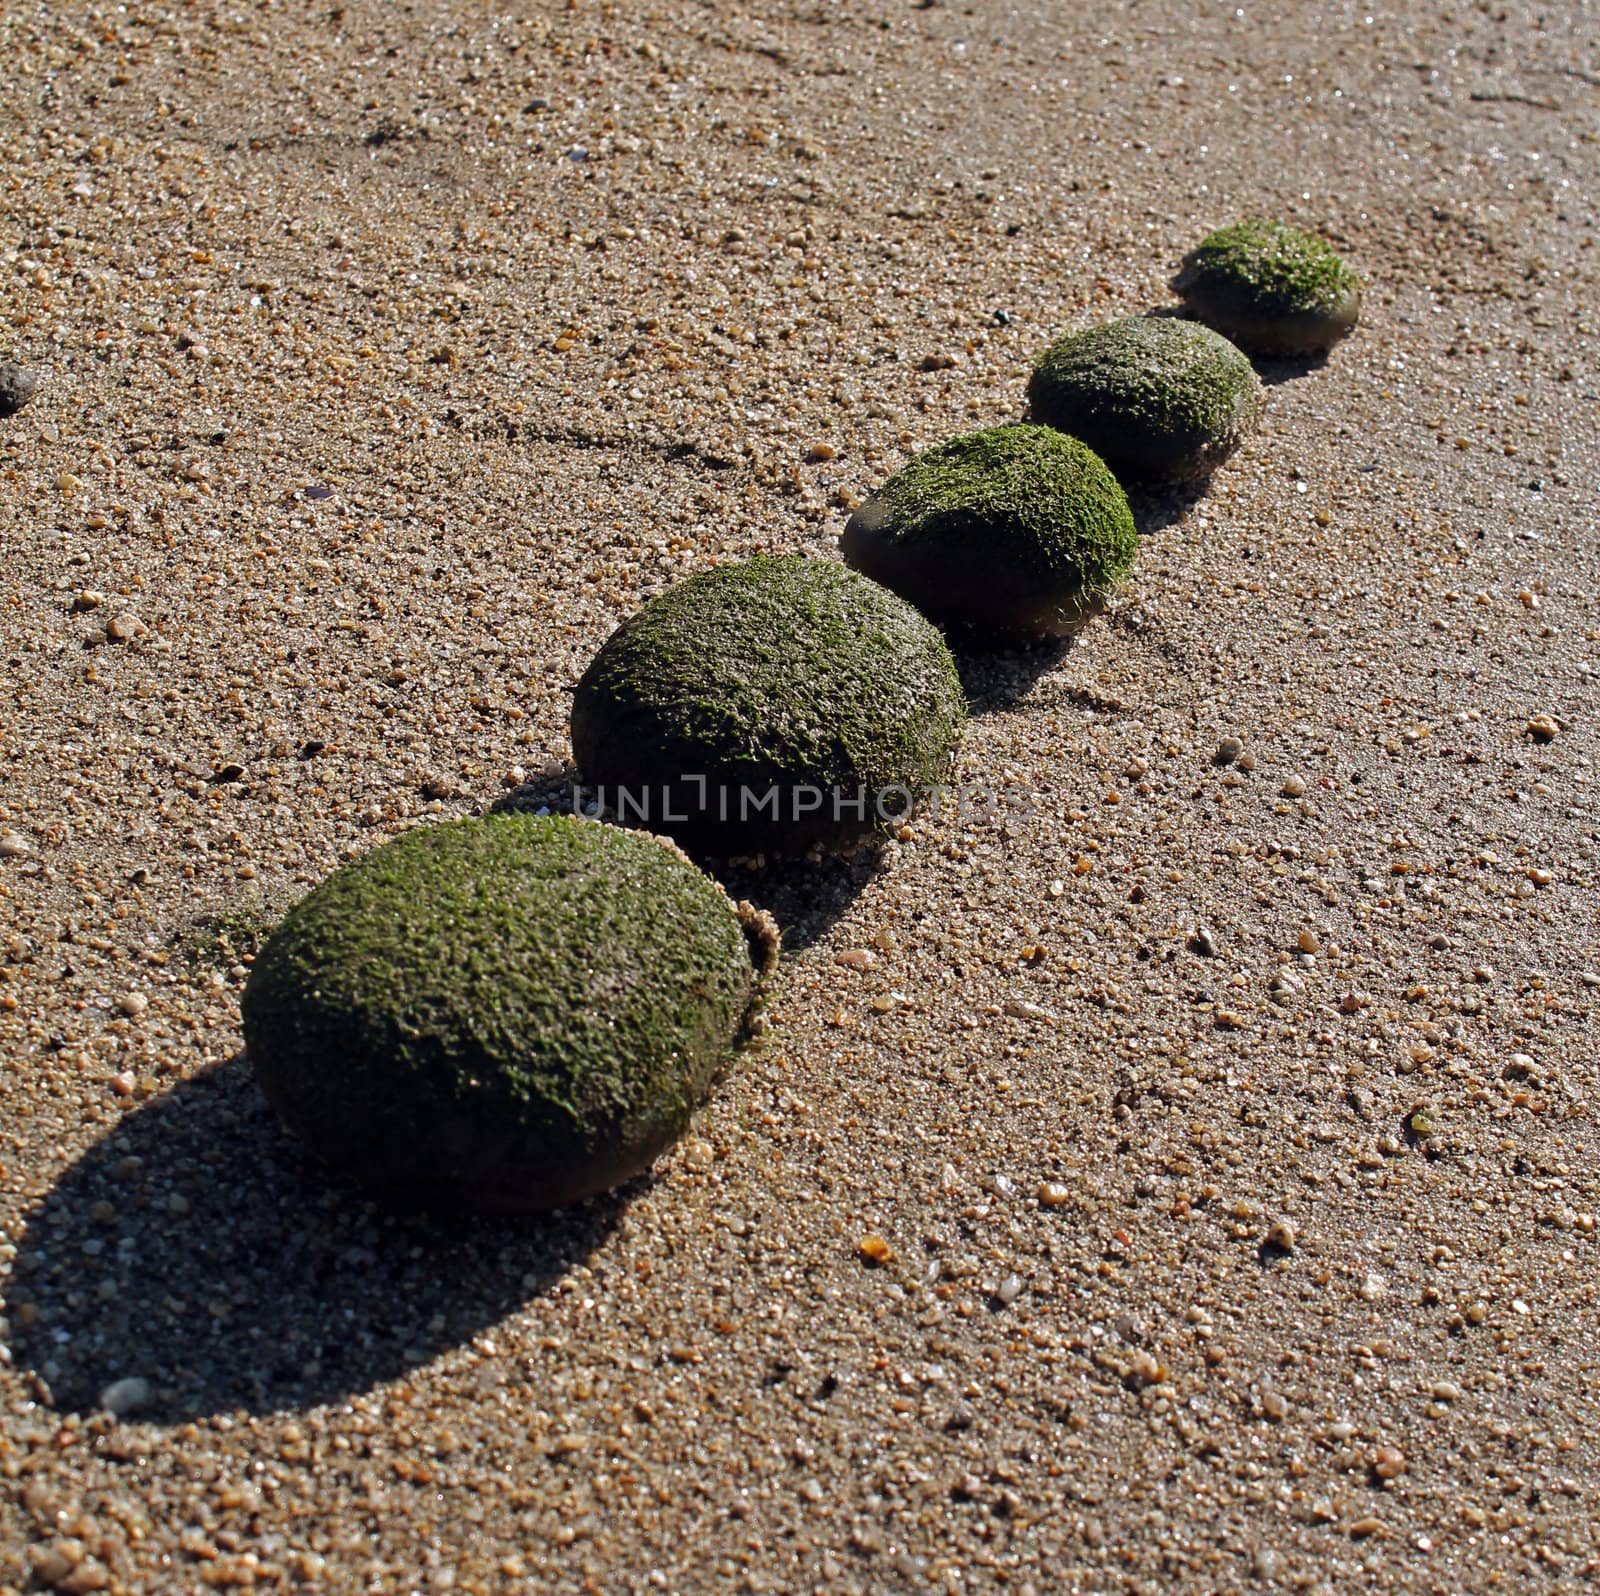 Three aligned stones